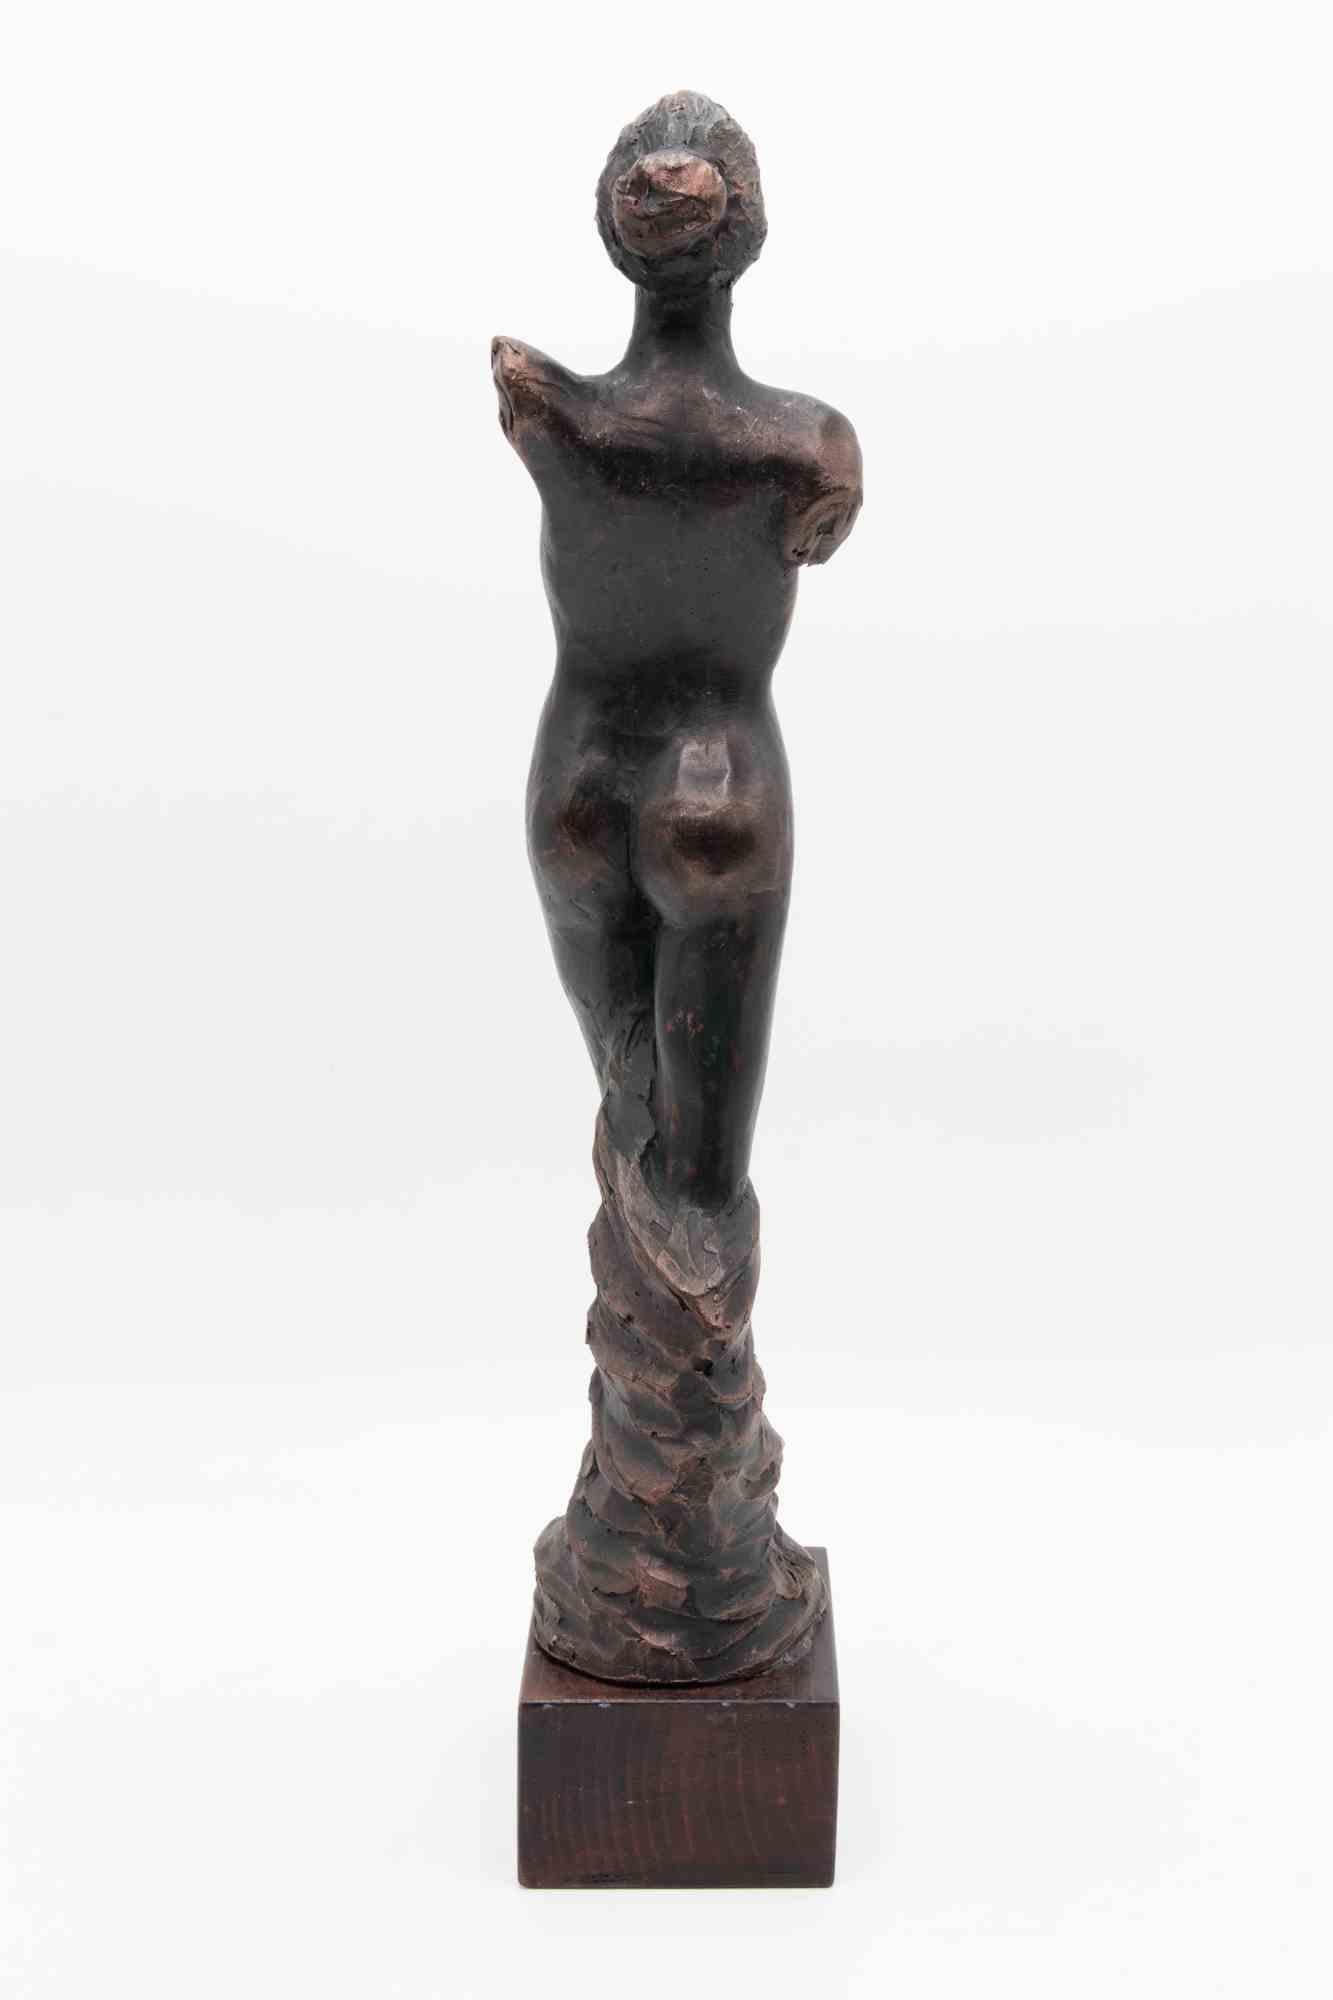 Statue of a Woman - Bronze Sculpture by Fabrizio Savi - 2000s For Sale 1